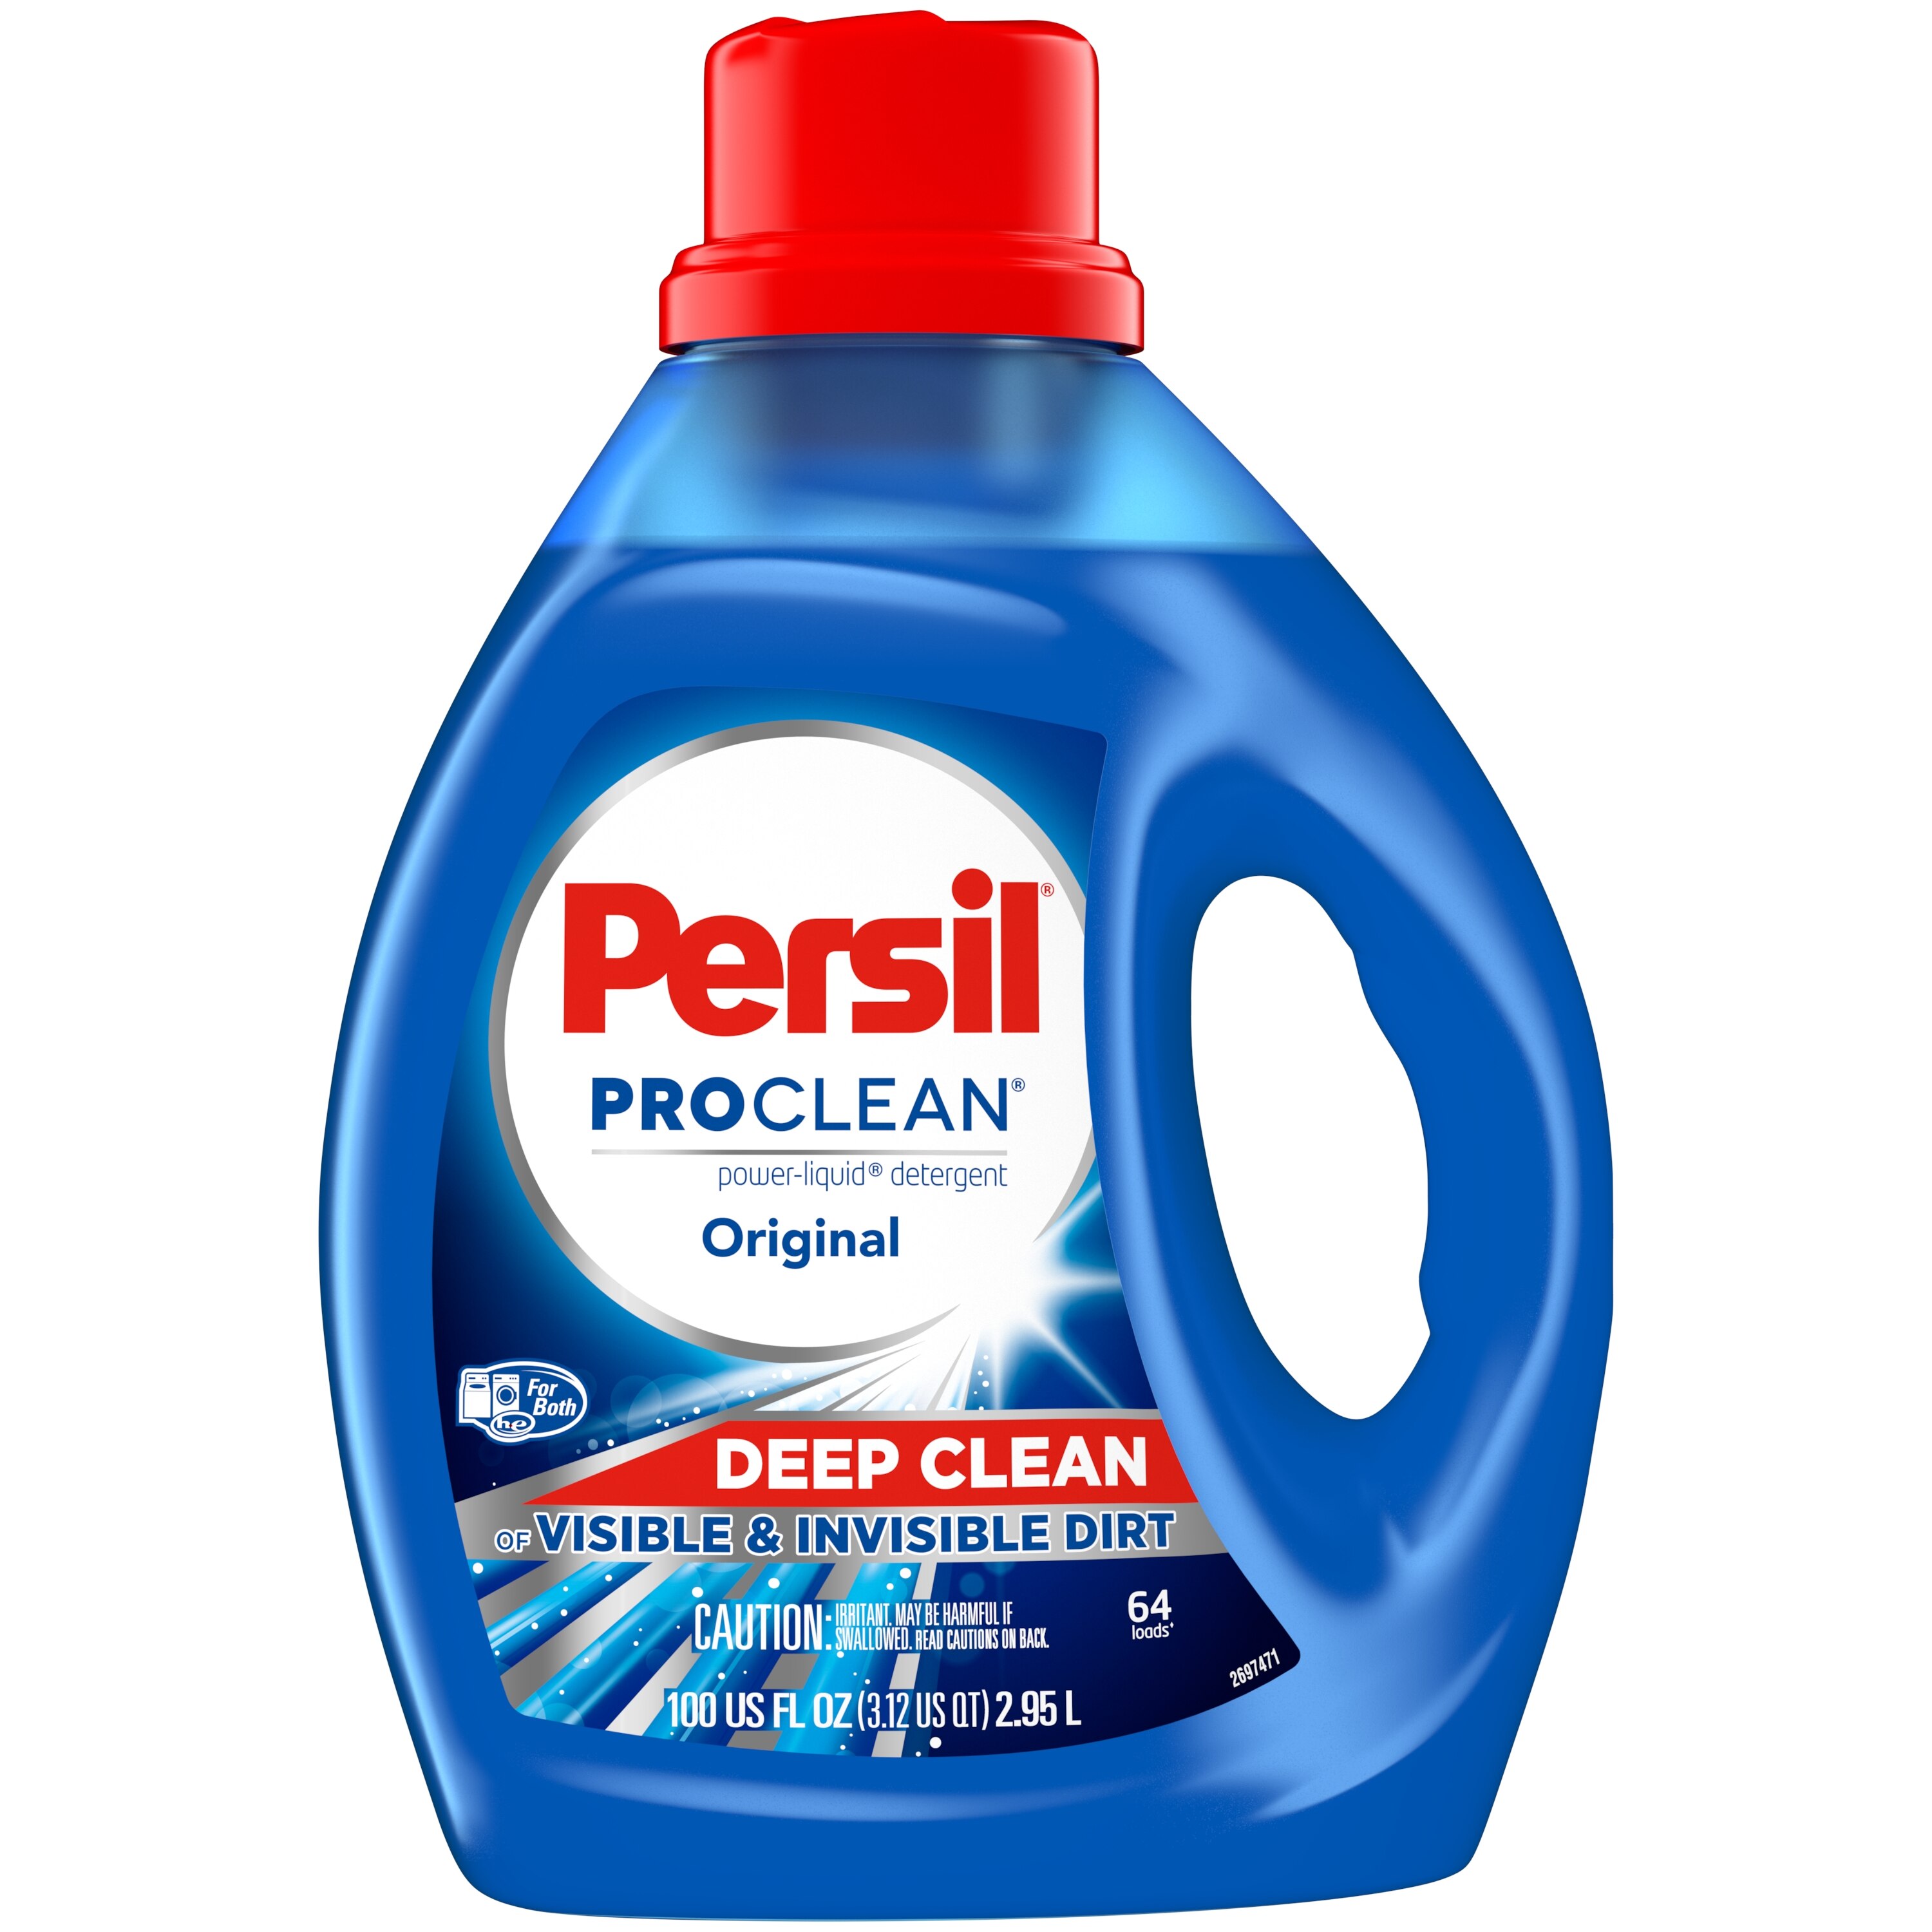 Persil ProClean Liquid Laundry Detergent, Original, 100 OZ, 64 Loads